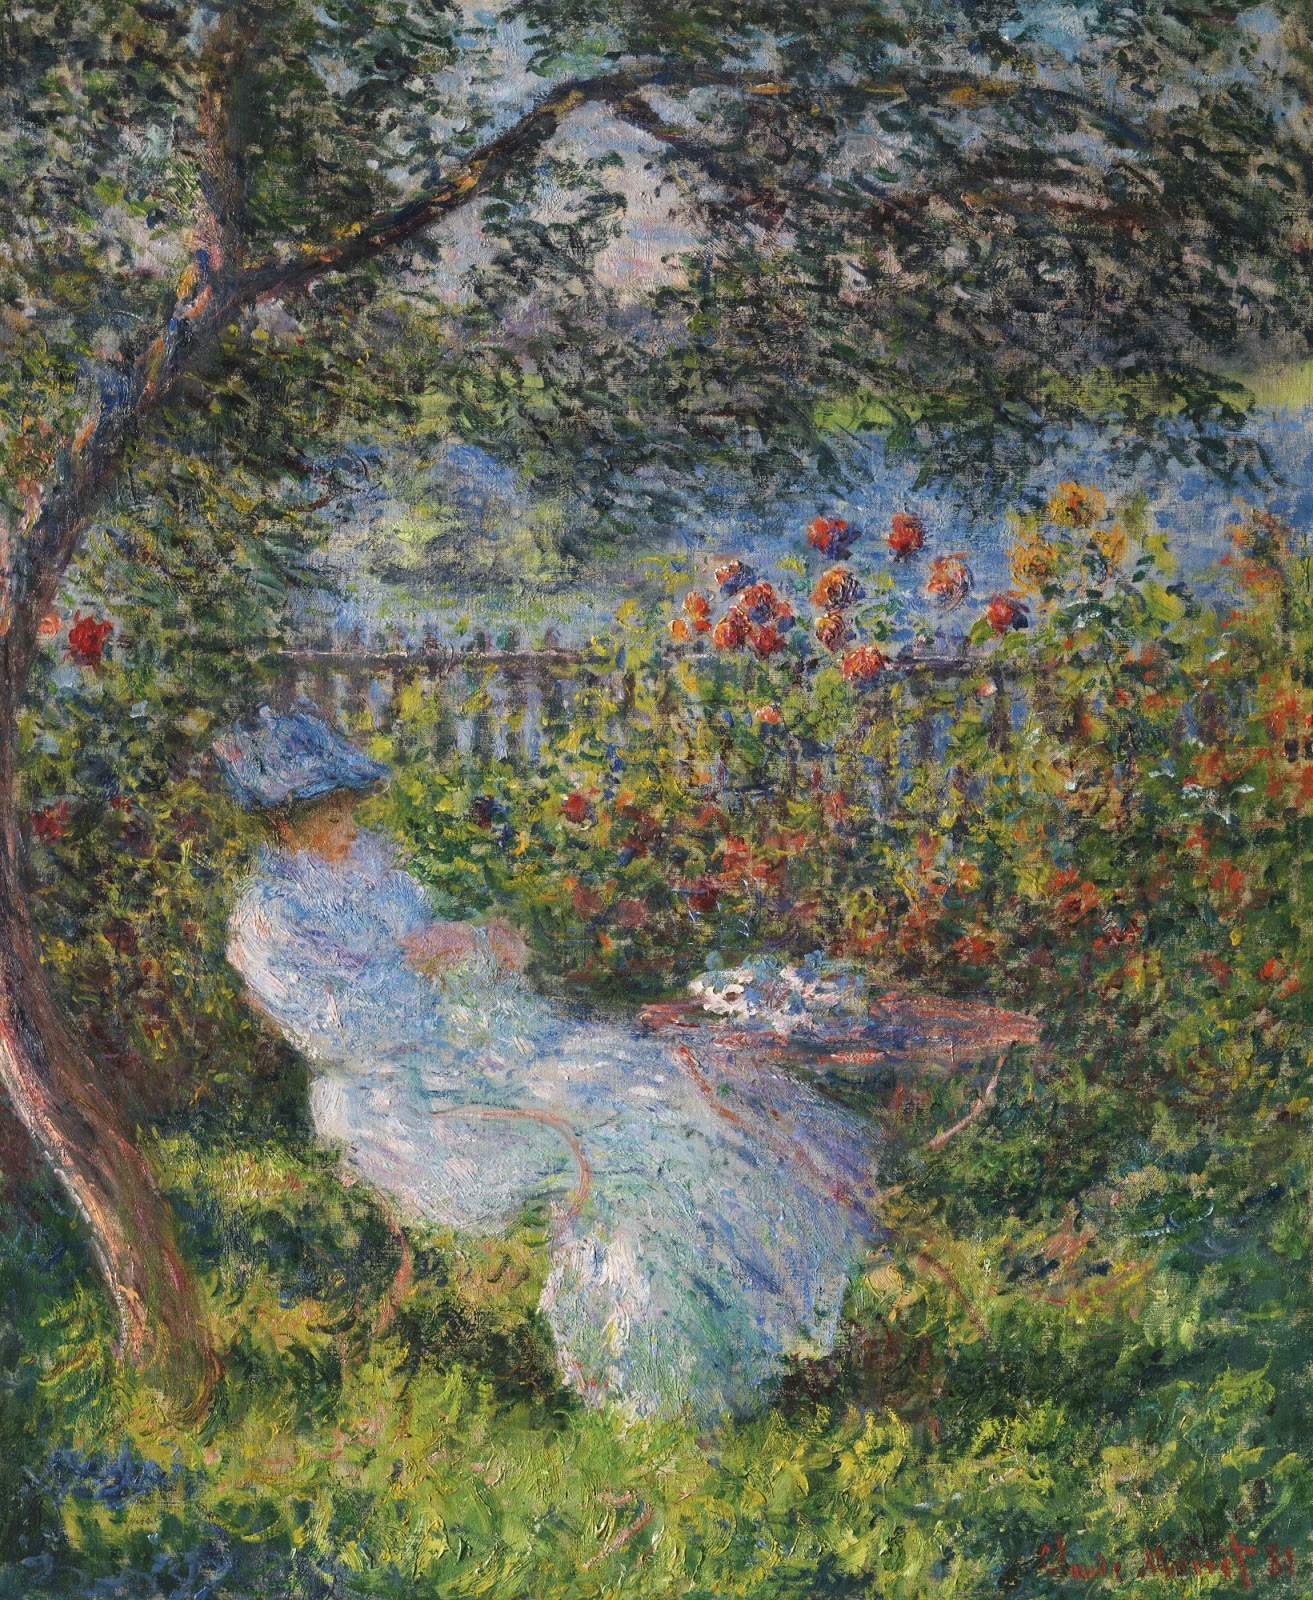 Claude+Monet-1840-1926 (849).jpg